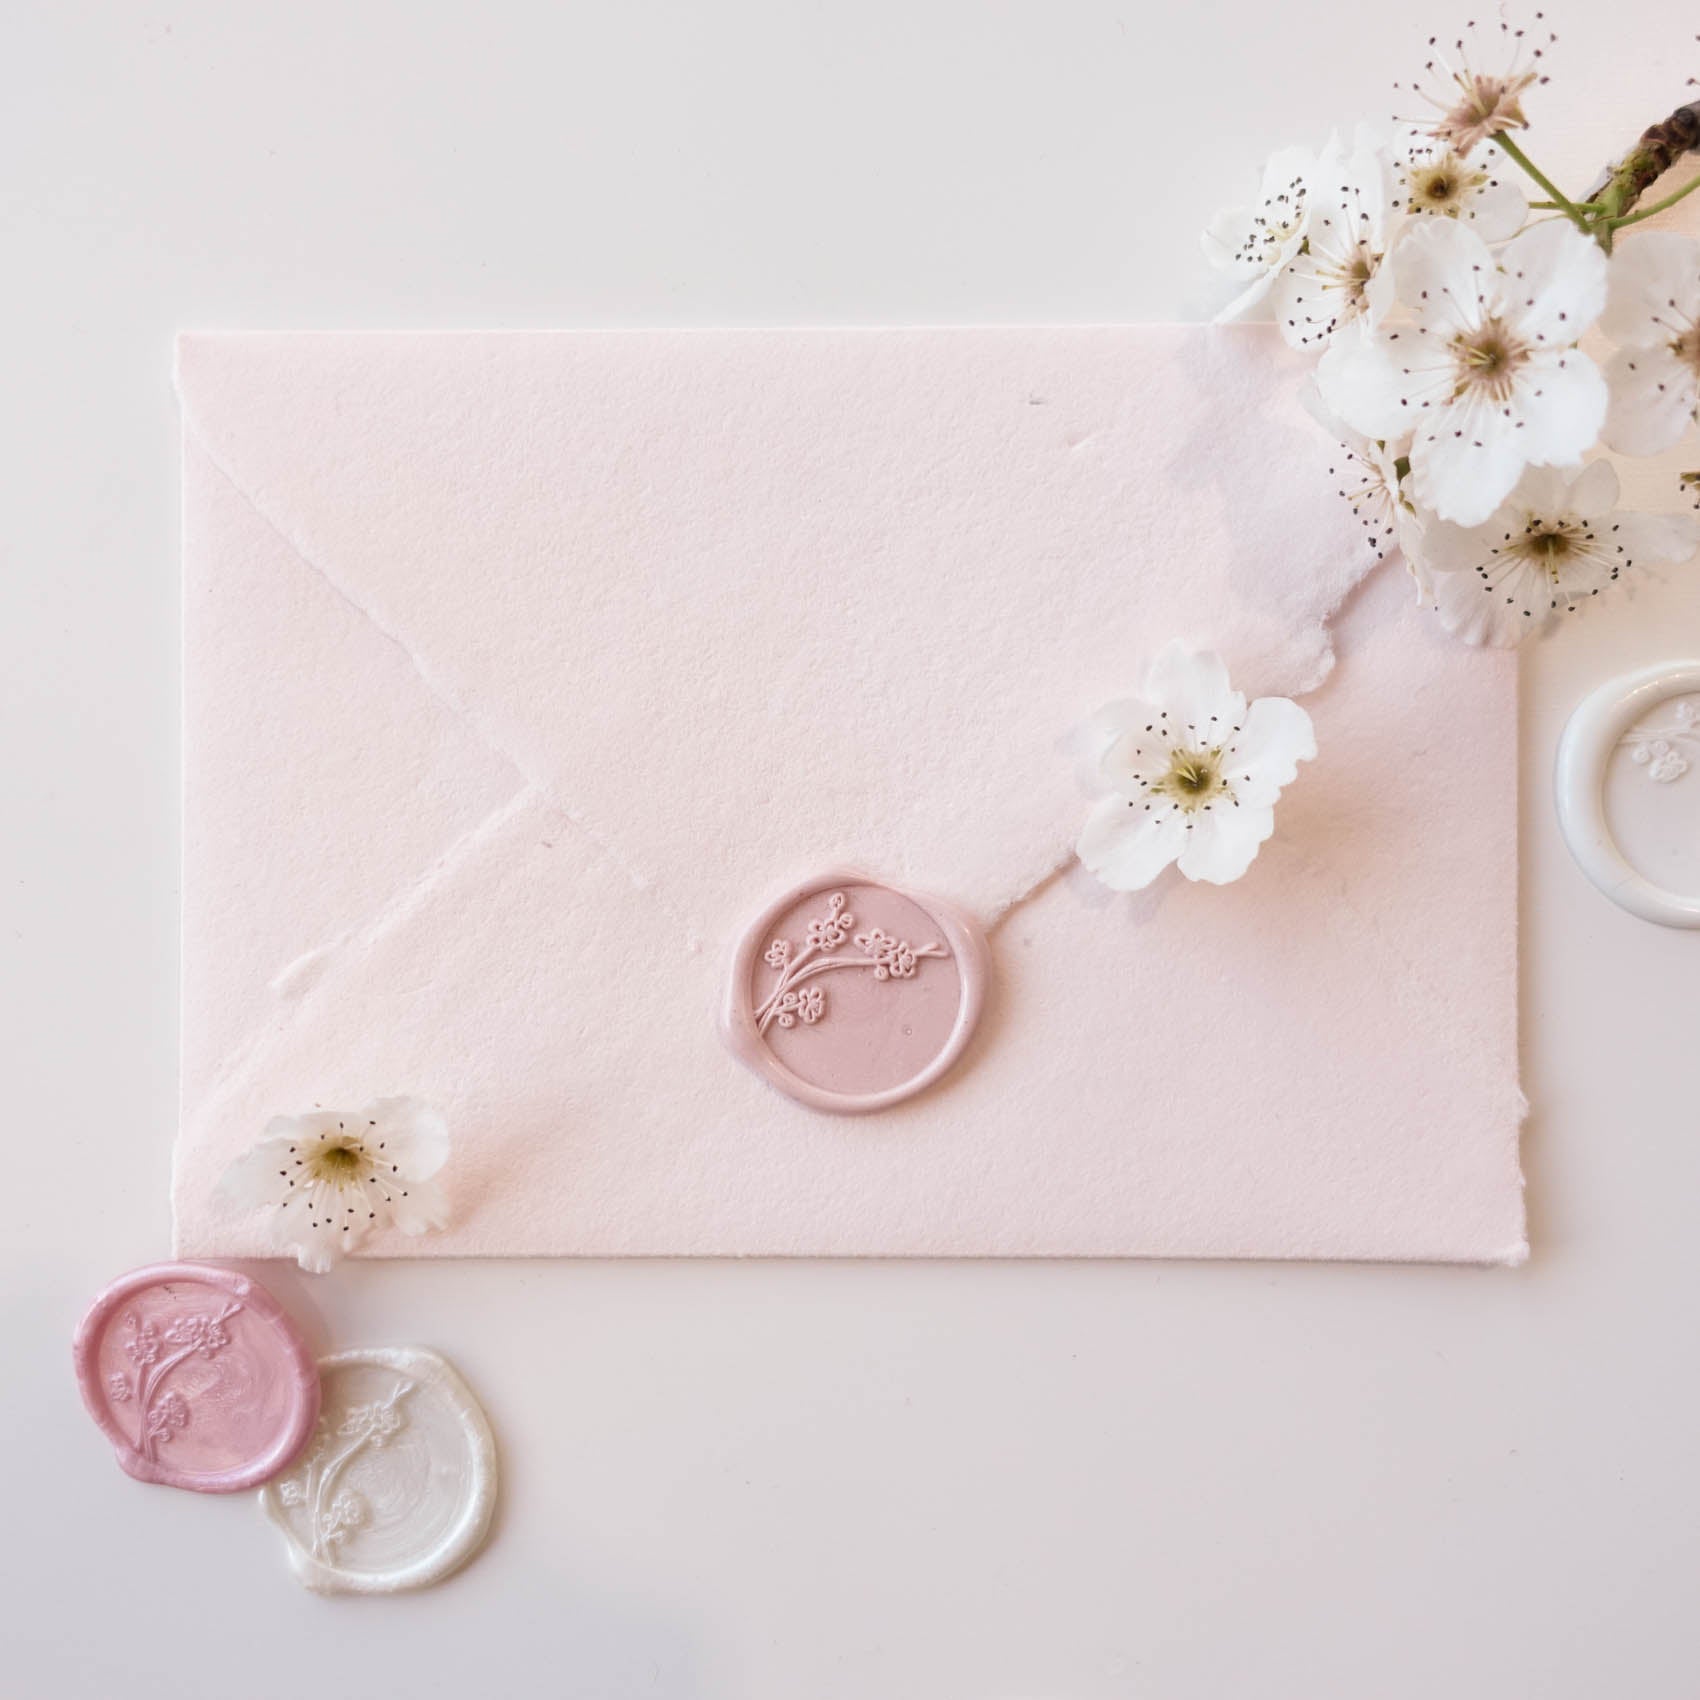 Cherry blossom wax seal stamp on pink envelope sakura fiona ariva australia